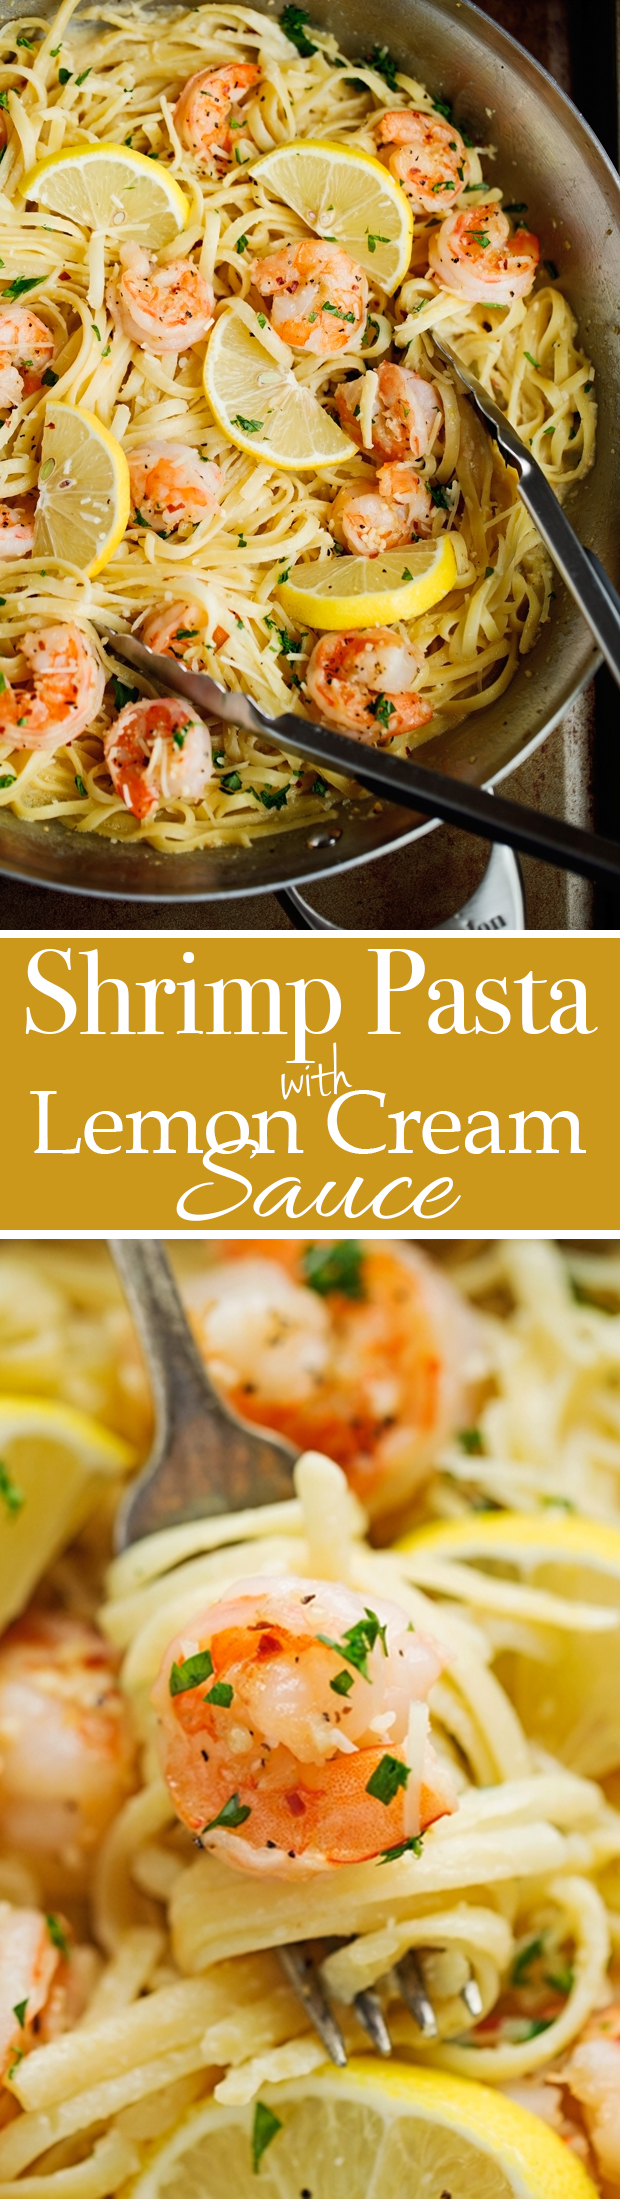 Shrimp Pasta with Lemon Cream Sauce - An easy weeknight friendly pasta dinner thats got the most delicious lemon cream sauce! | Littlespicejar.com @littlespicejar